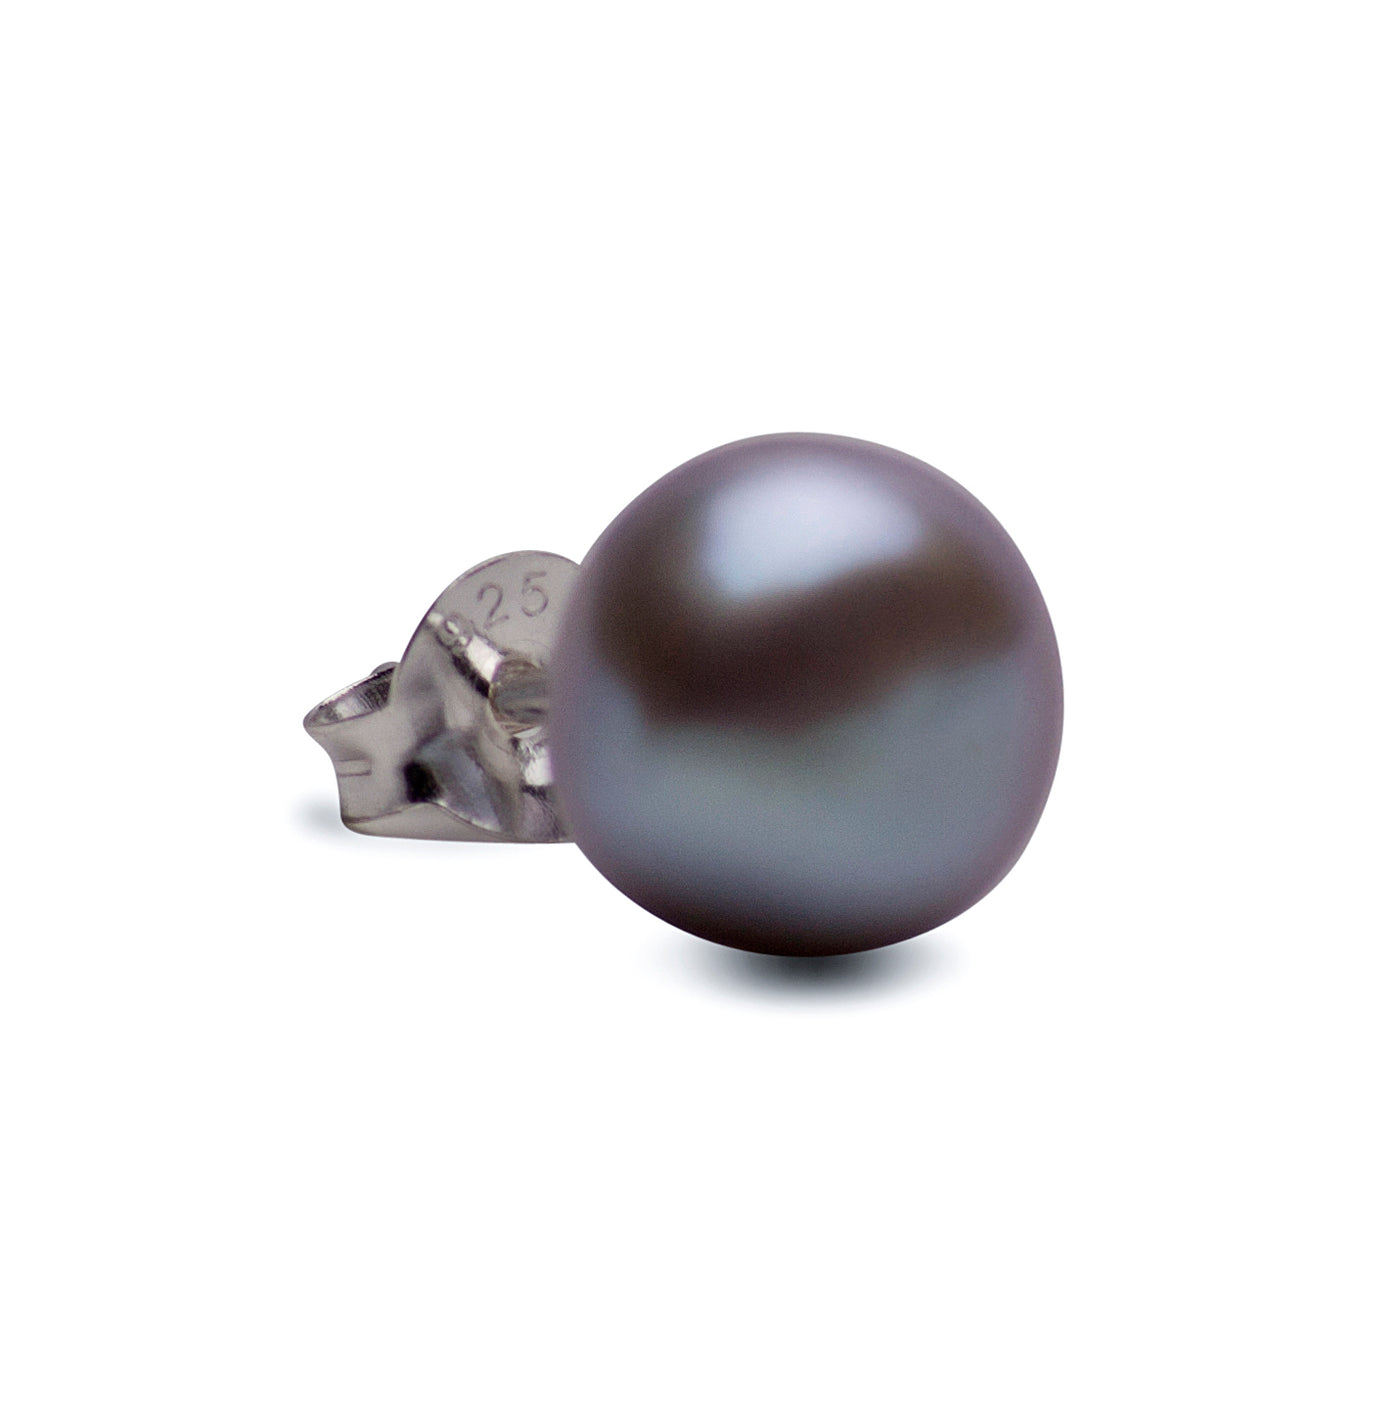 8 mm Grey South Seas Pearl Earrings | SilverAndGold